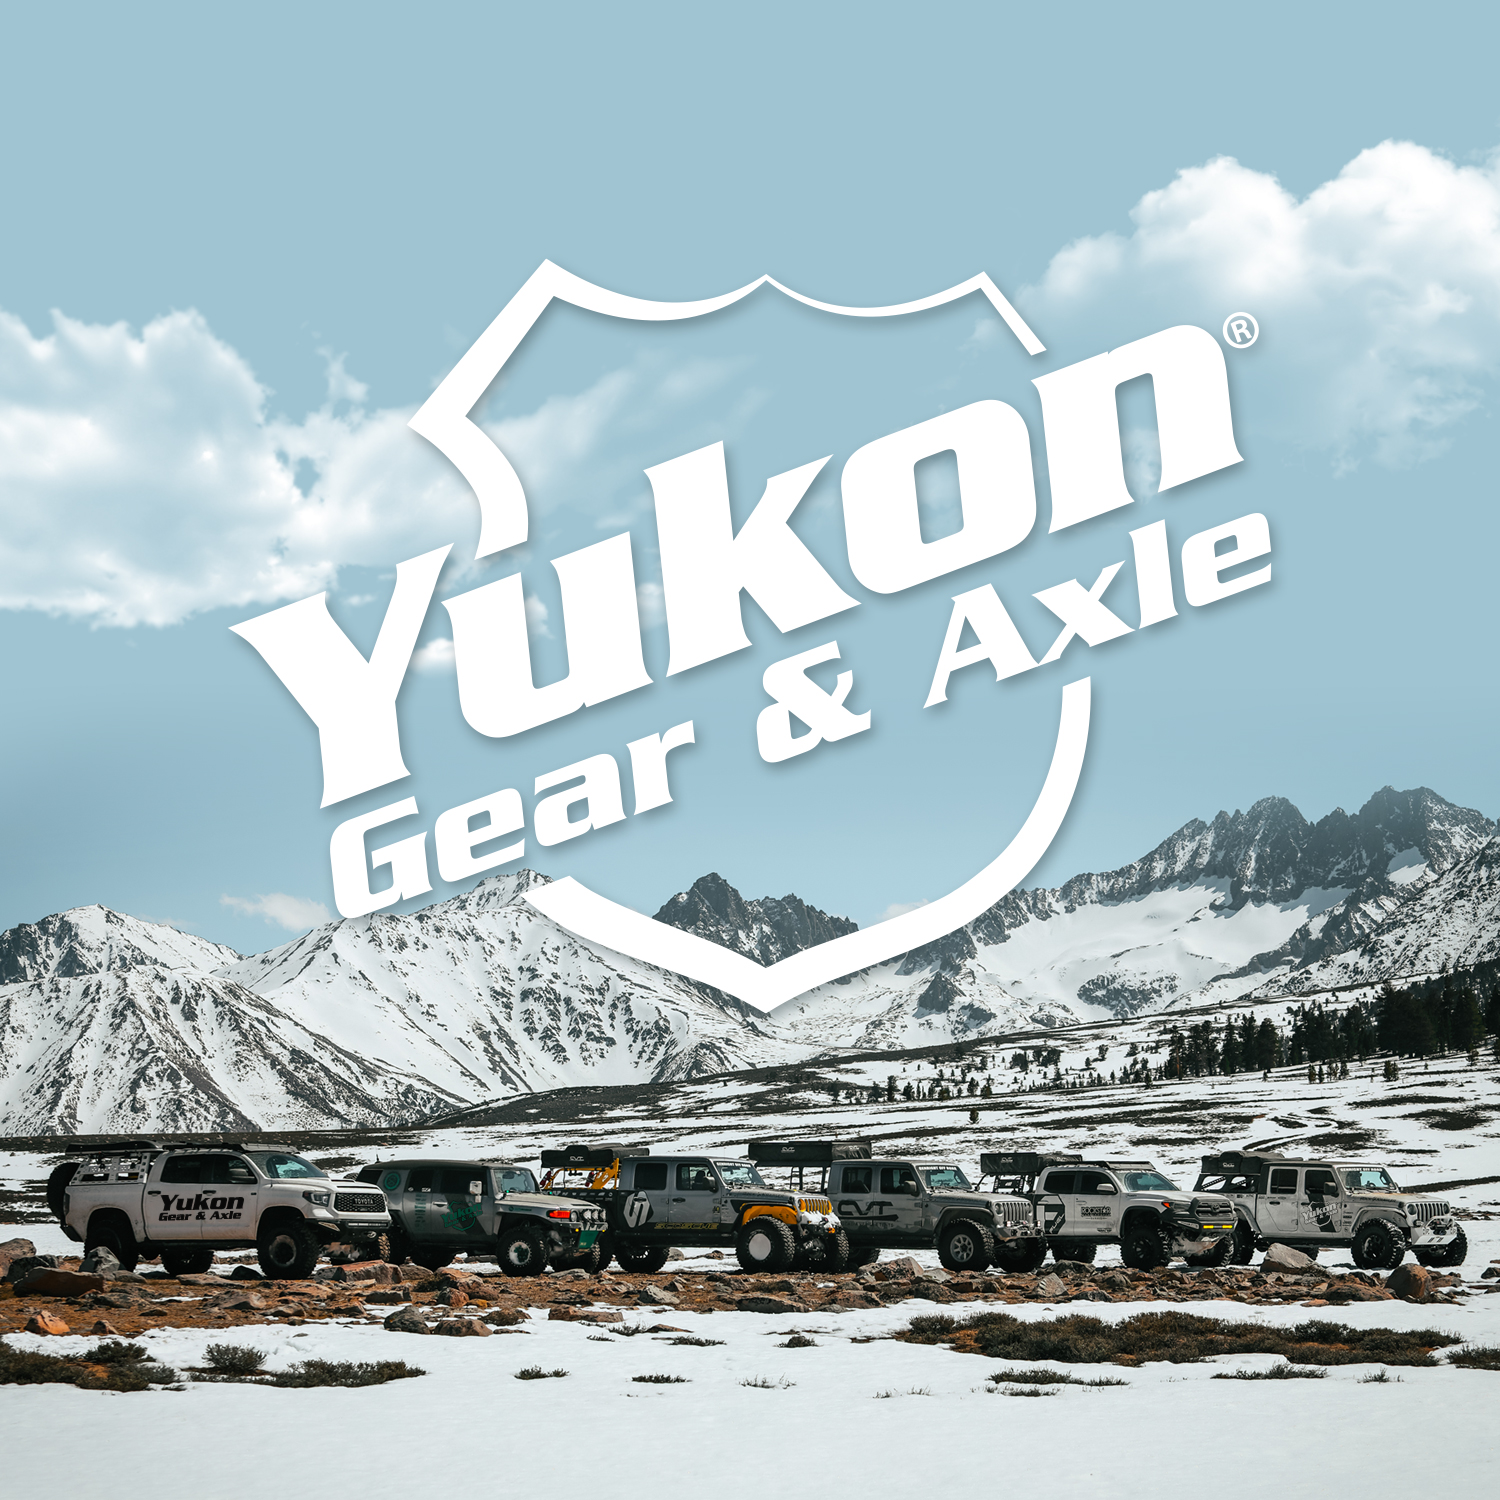 Yukon replacement standard open carrier case for Dana 44, 19 spline, 3.73 & down